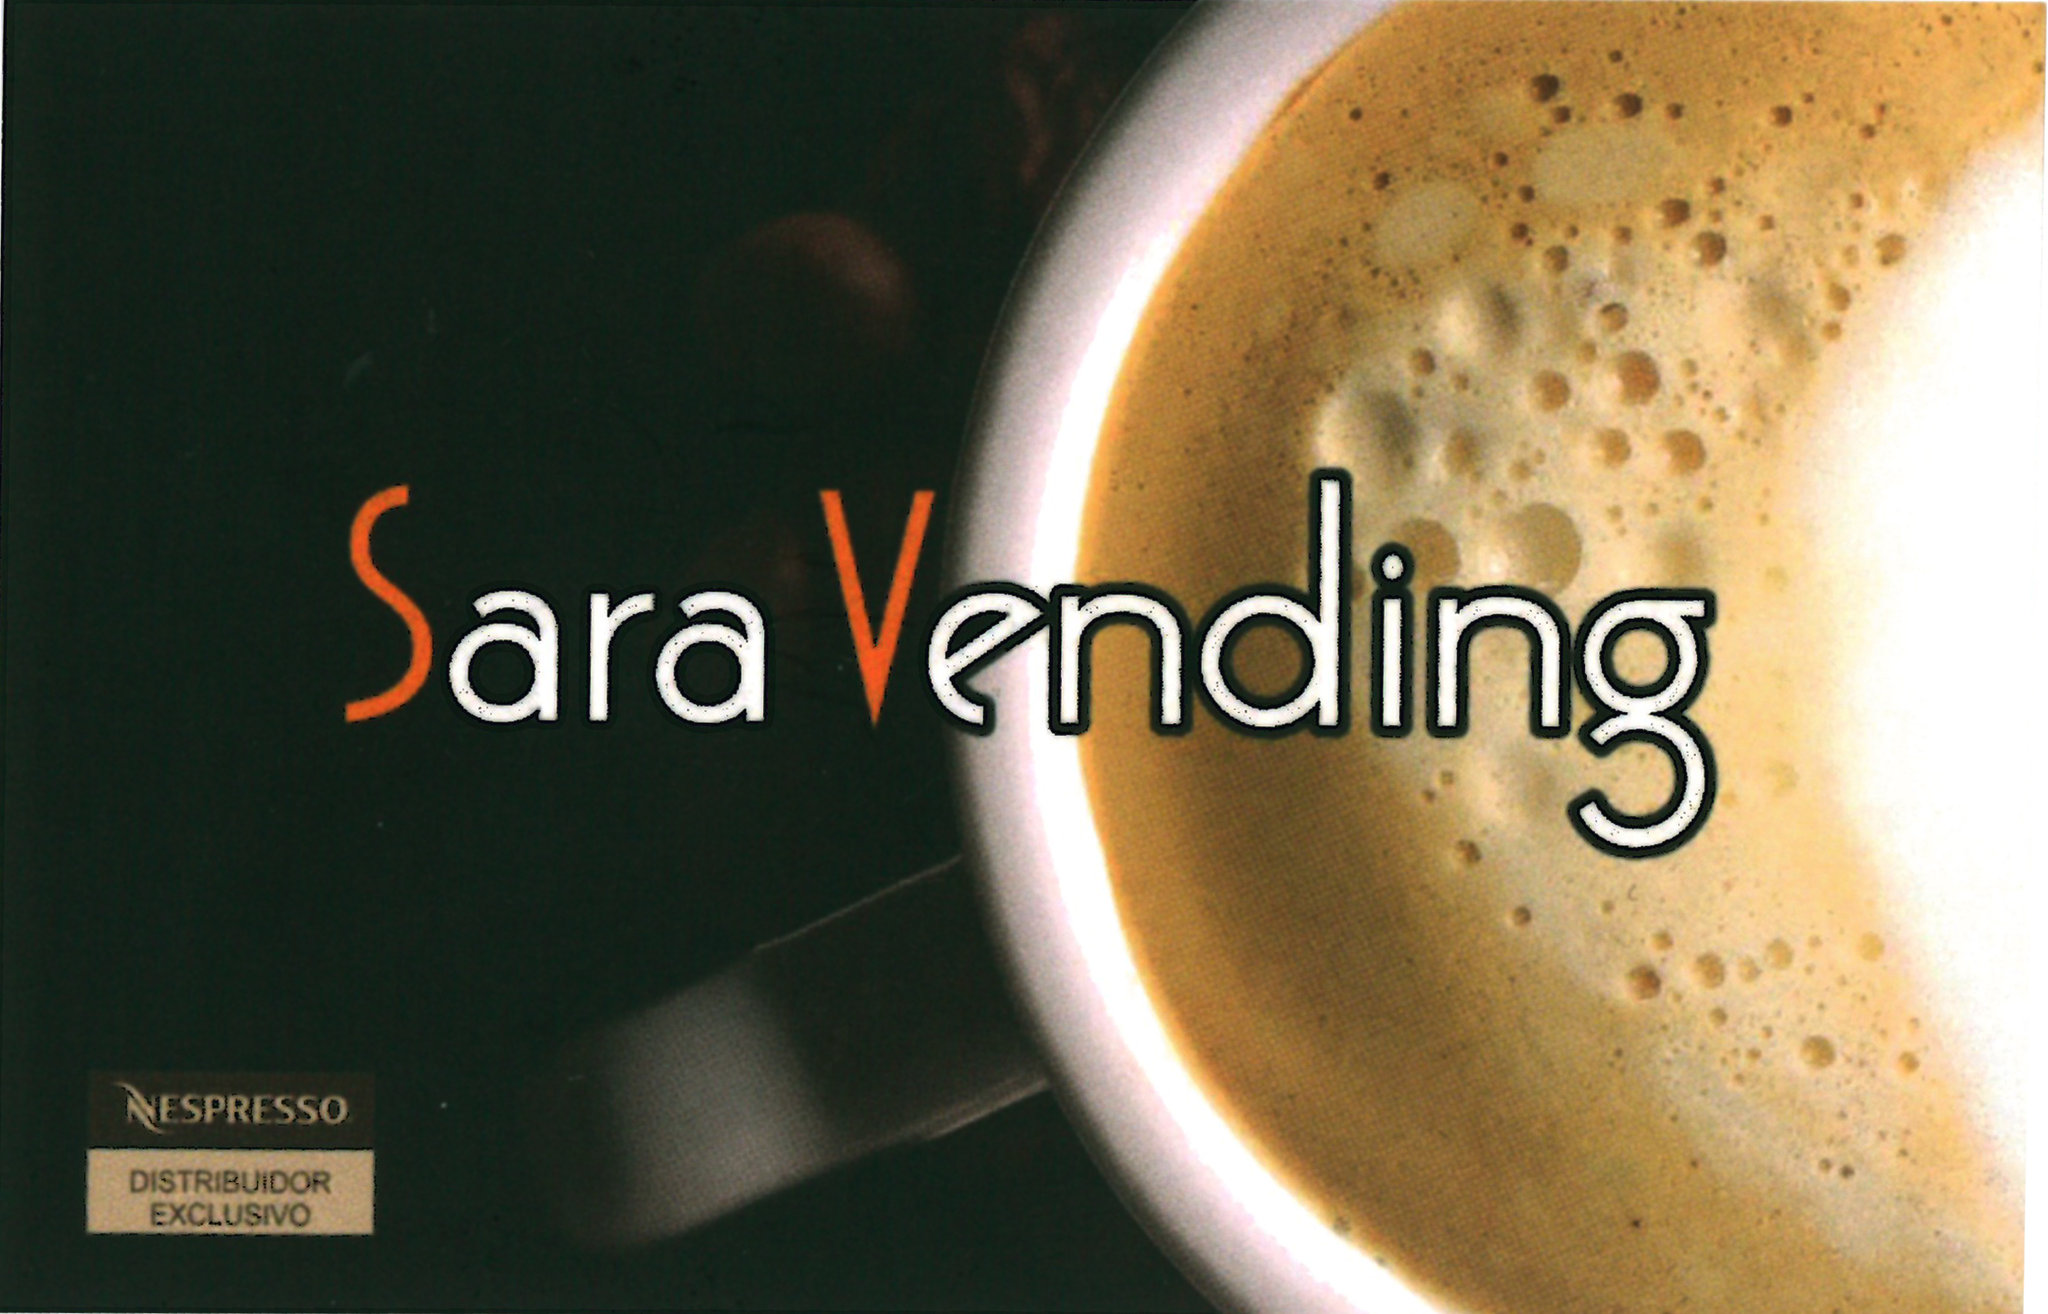 Sara Vending